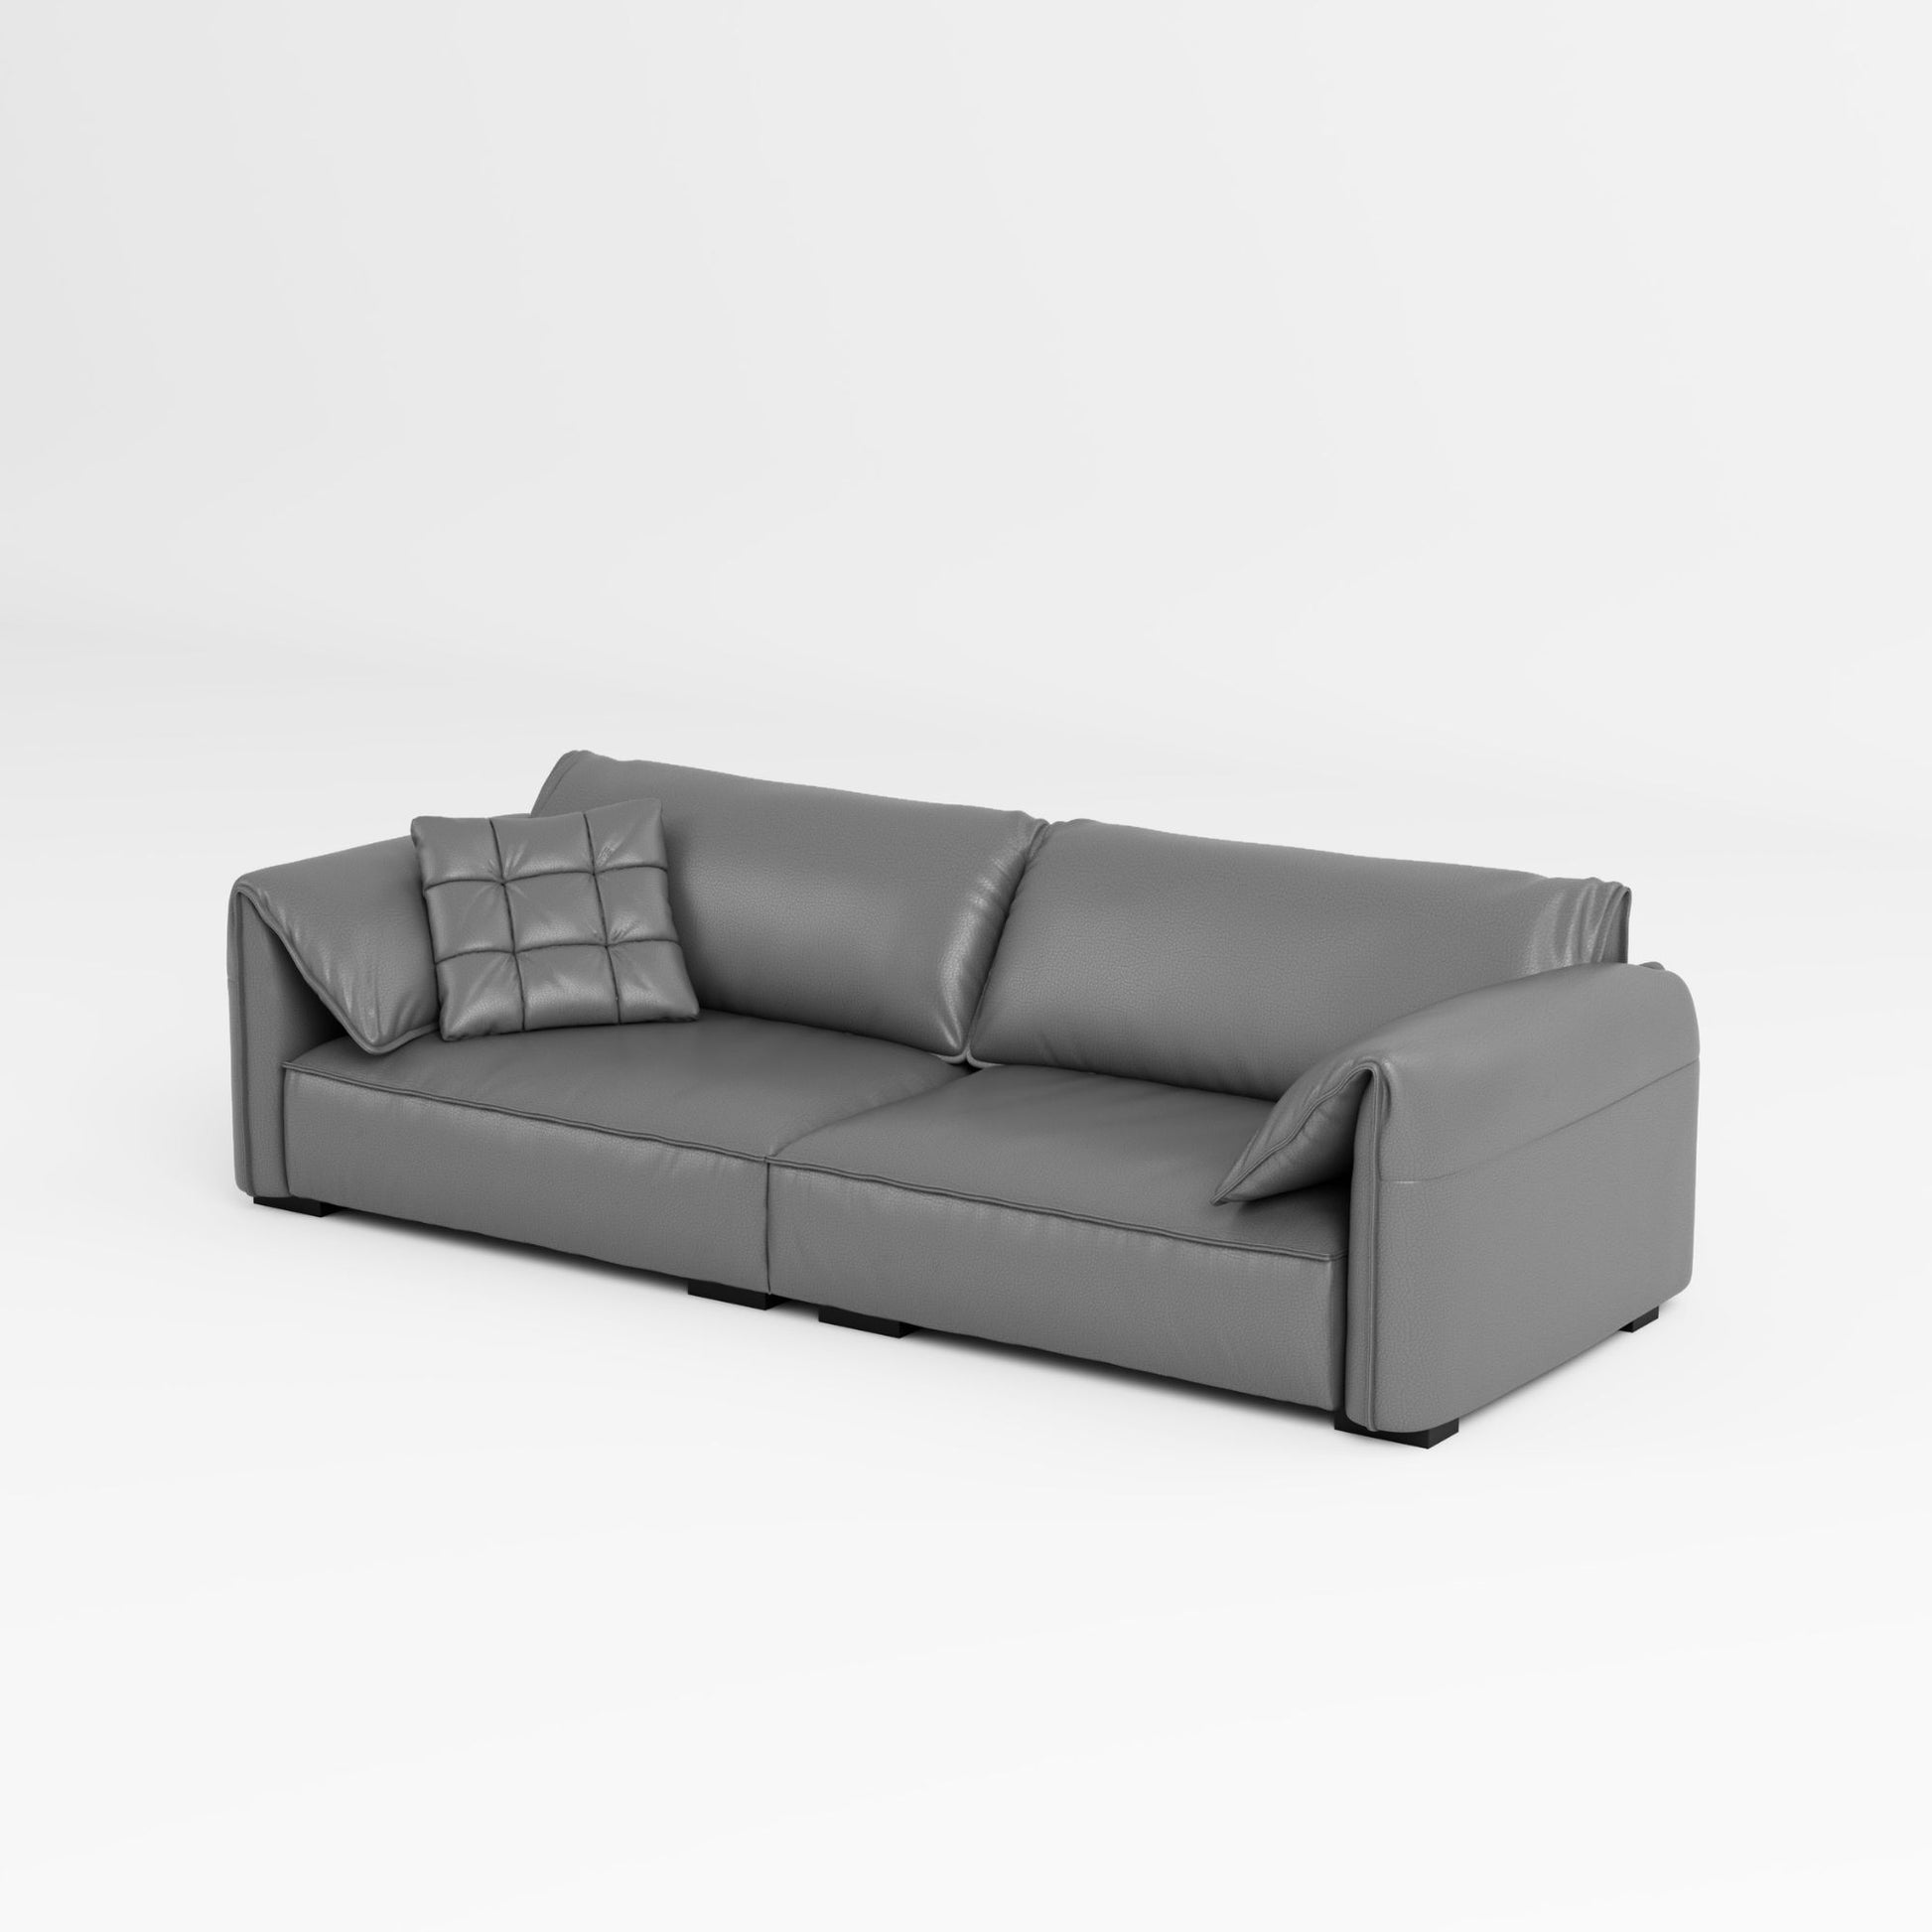 Comfy grey top grain full leather sofa